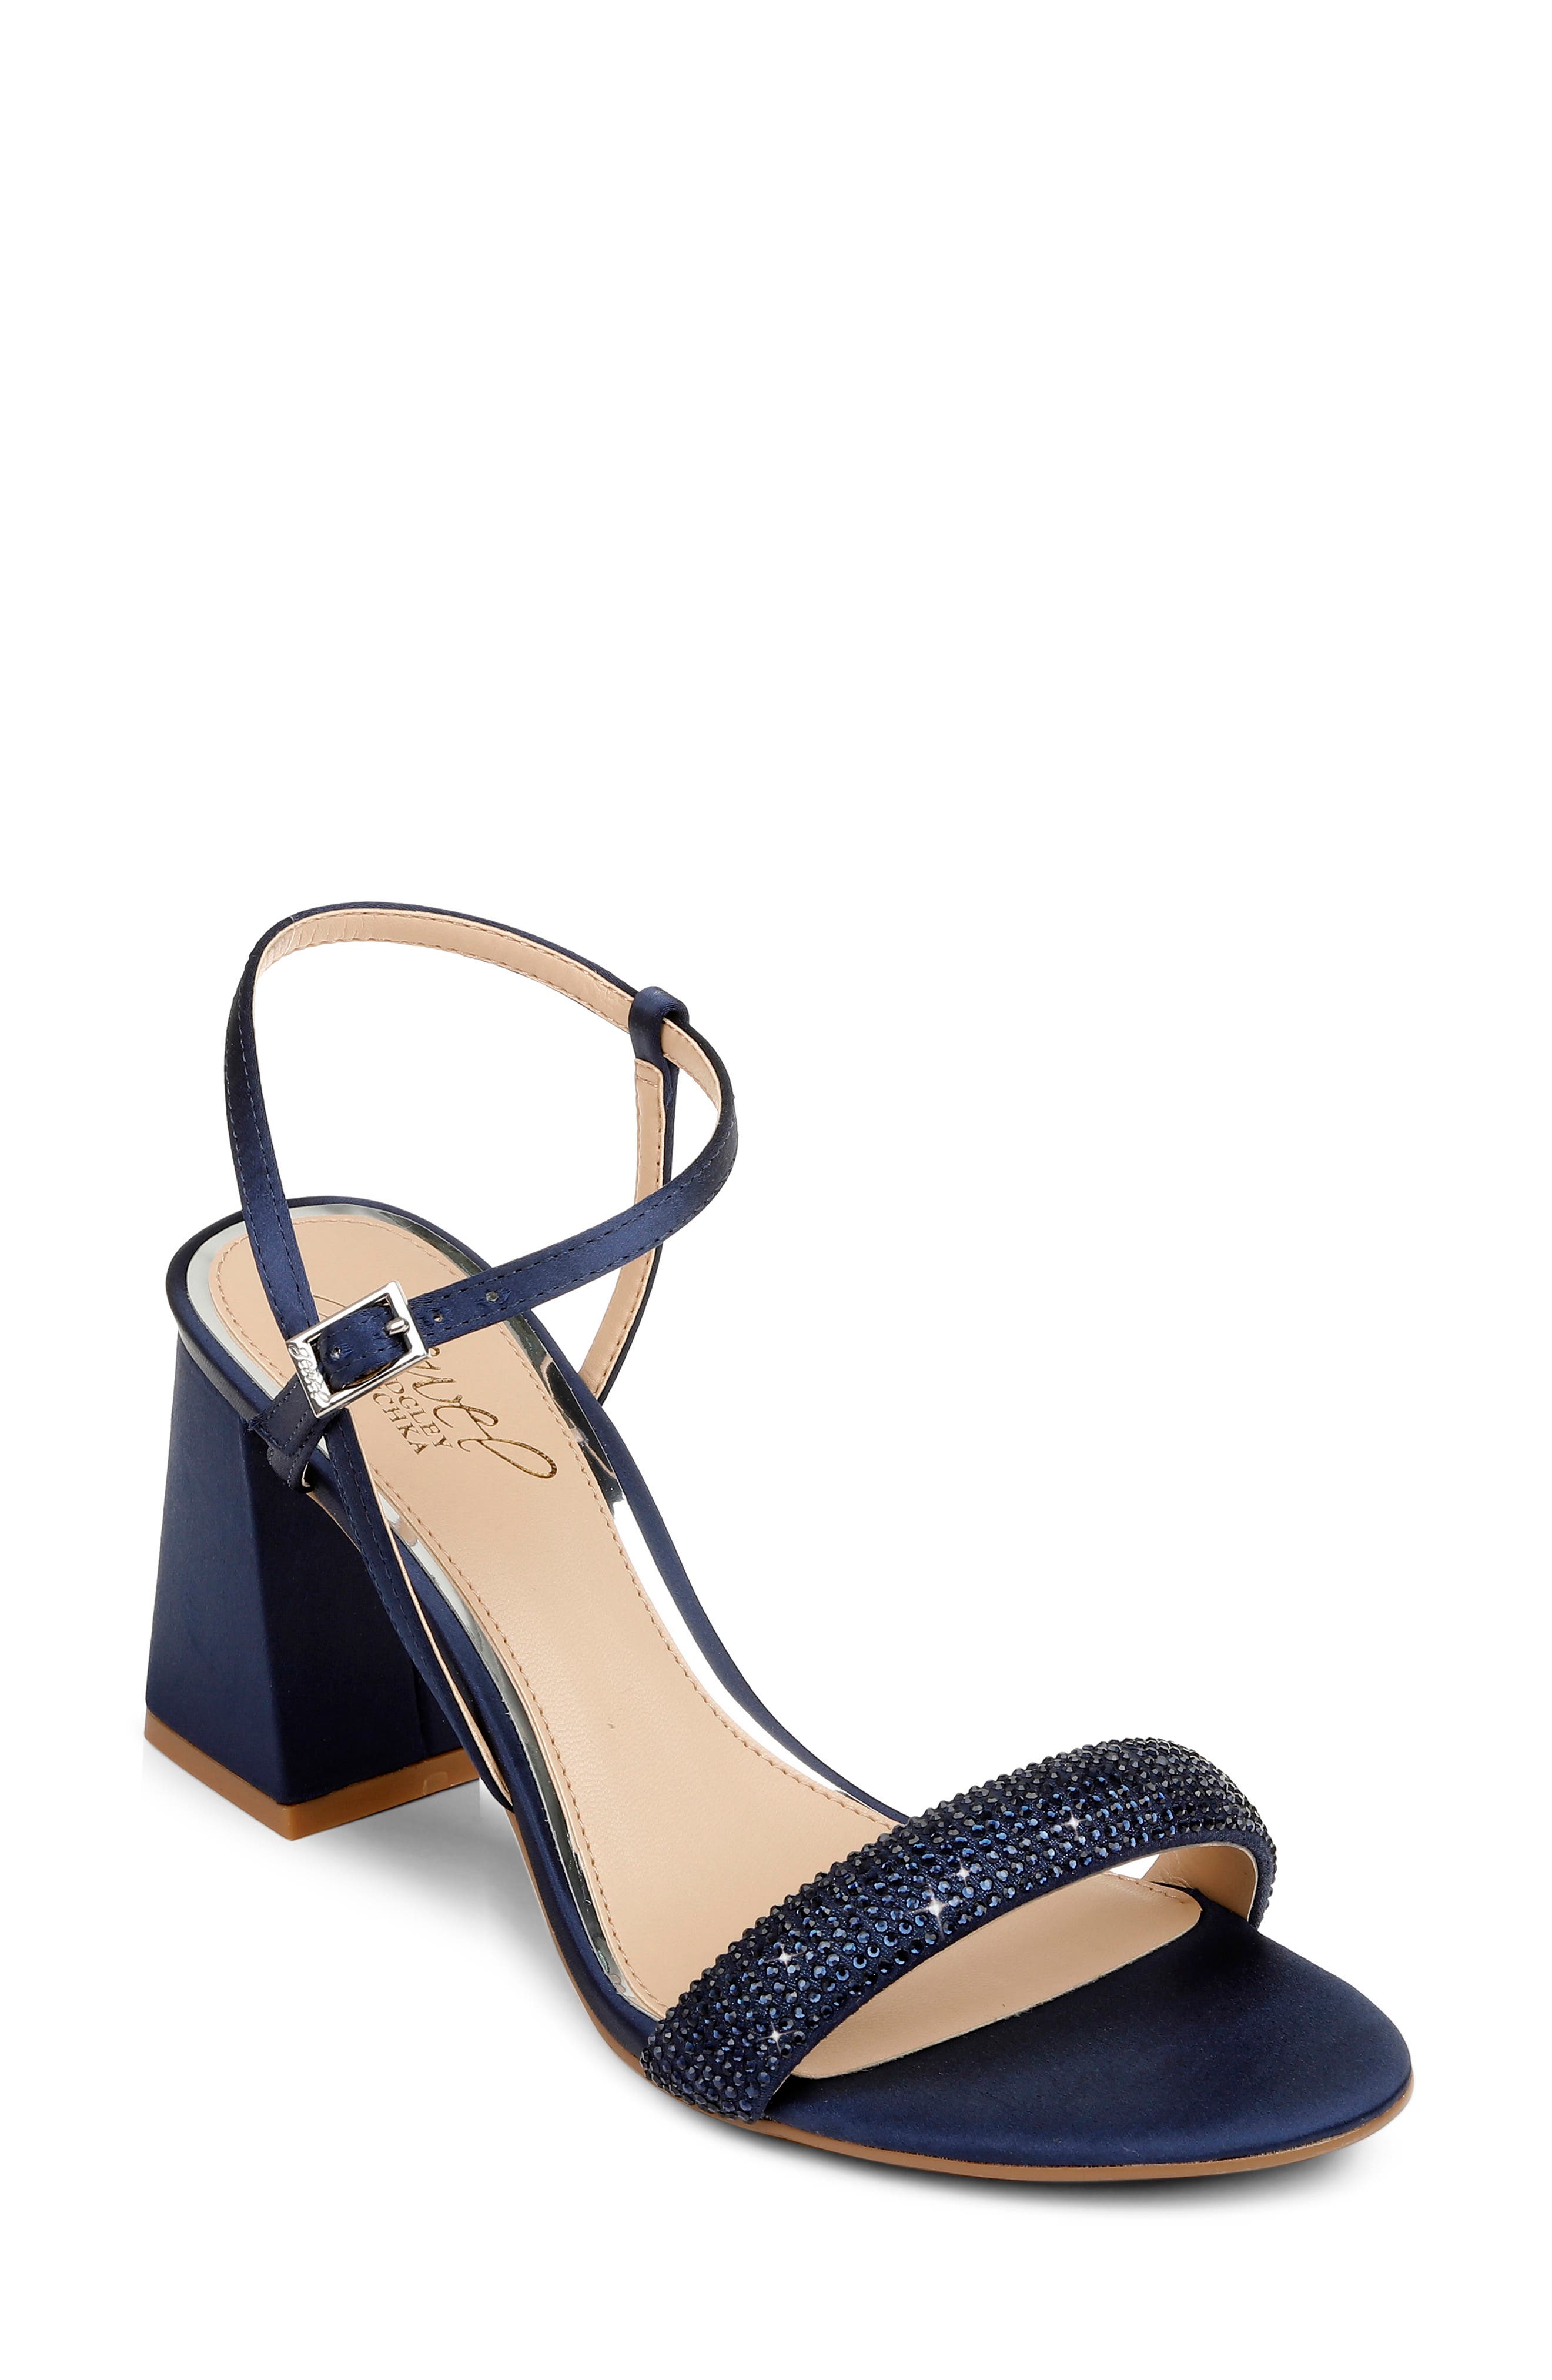 Buy > blue block heel sandal > in stock